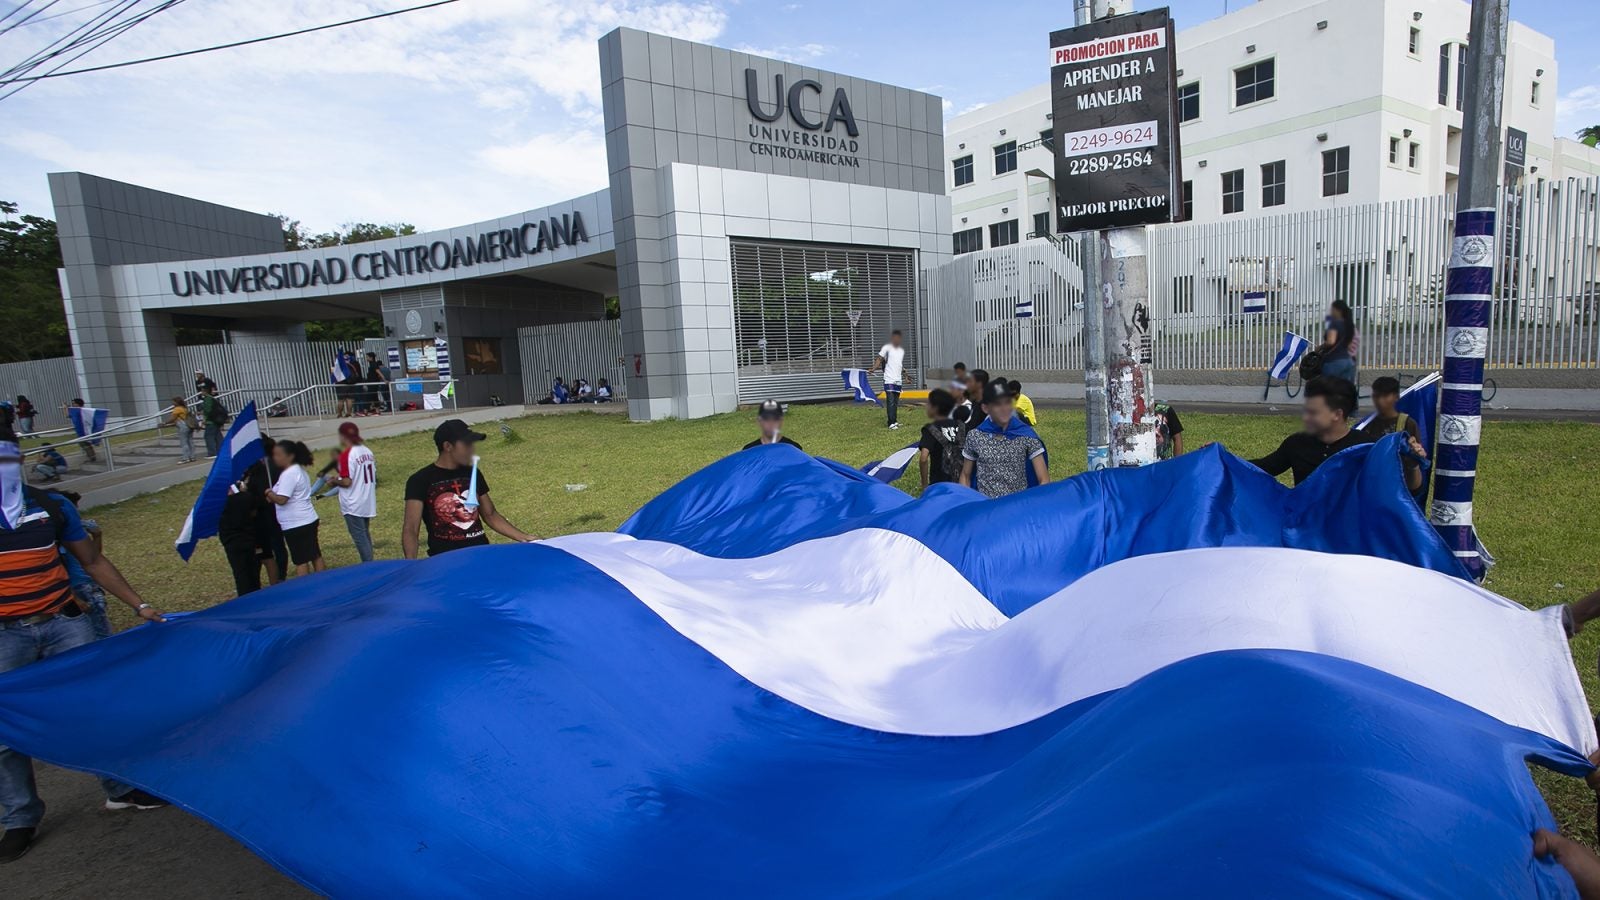 Protestors in front of main entrance to the Universidad Centroamericana in Managua, Nicaragua